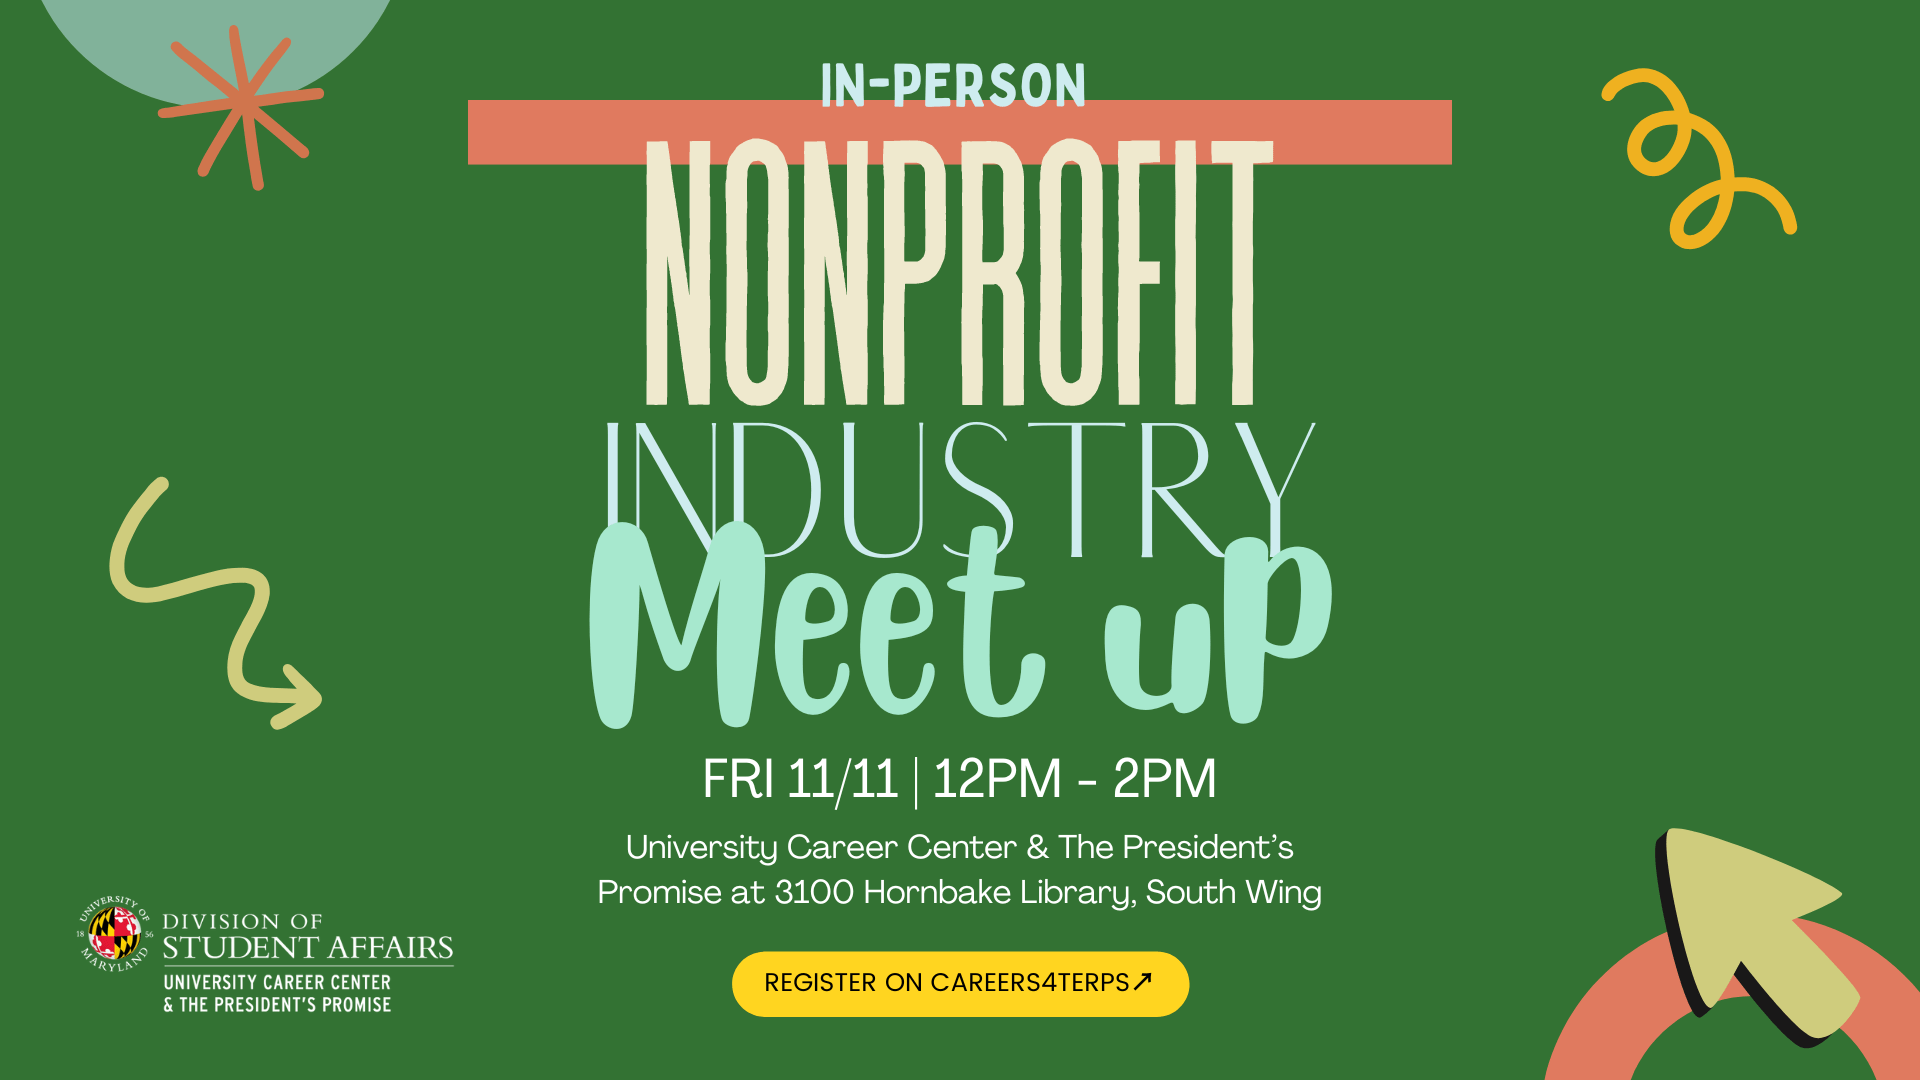 Nonprofit Industry Meetup